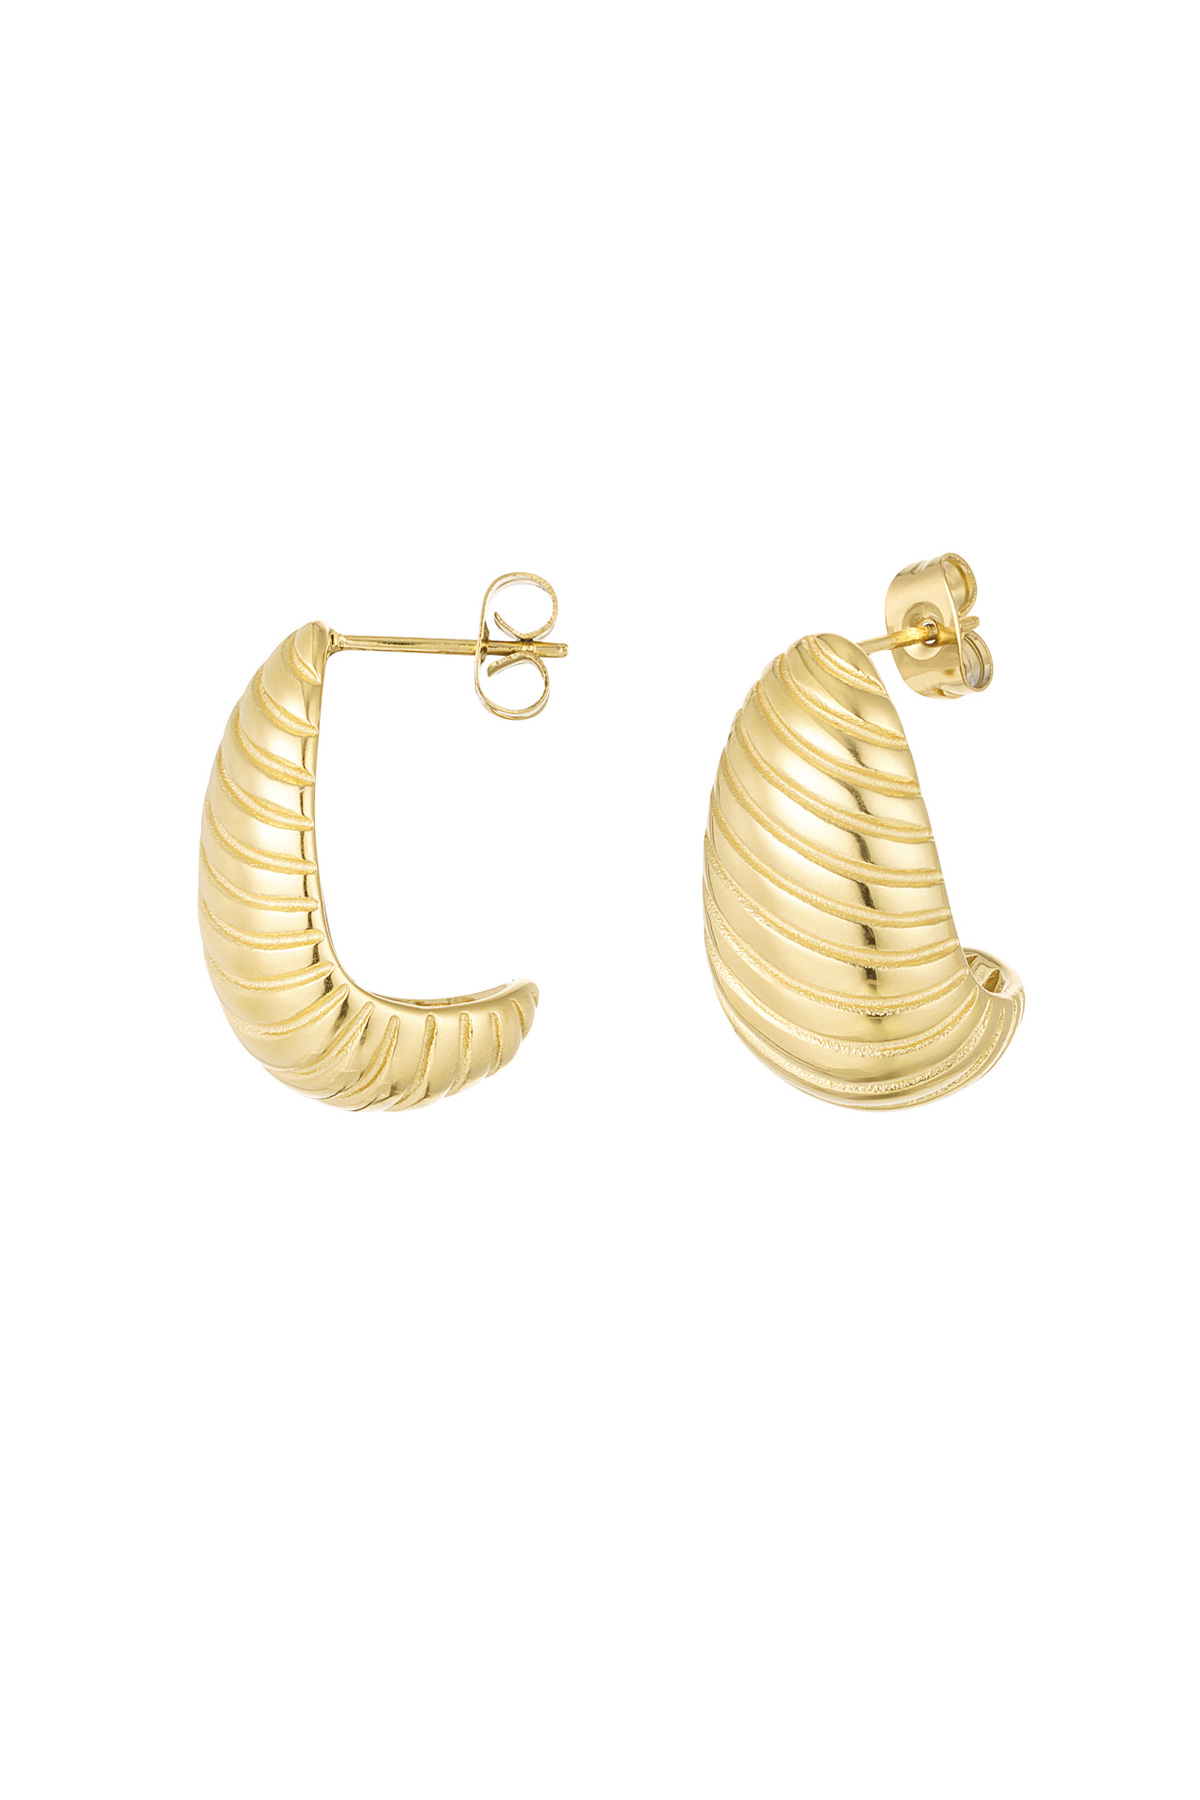 Half croissant earring - gold h5 